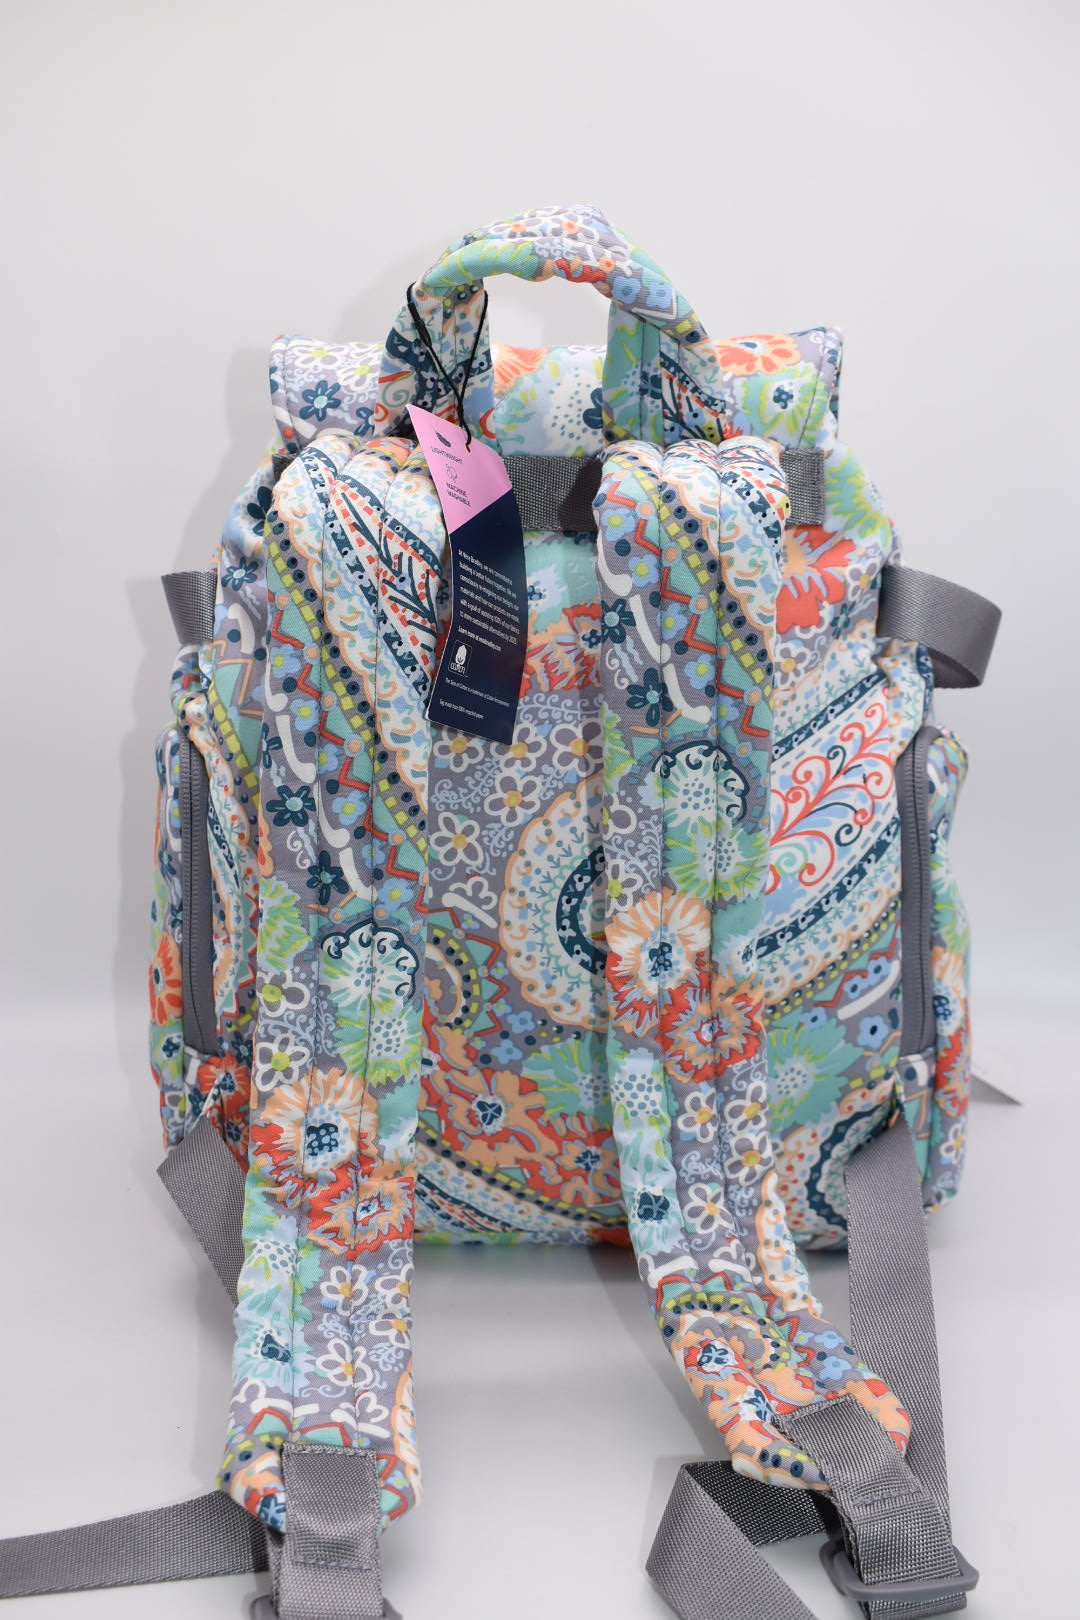 Vera Bradley Utility Backpack in "Citrus Paisley" Pattern